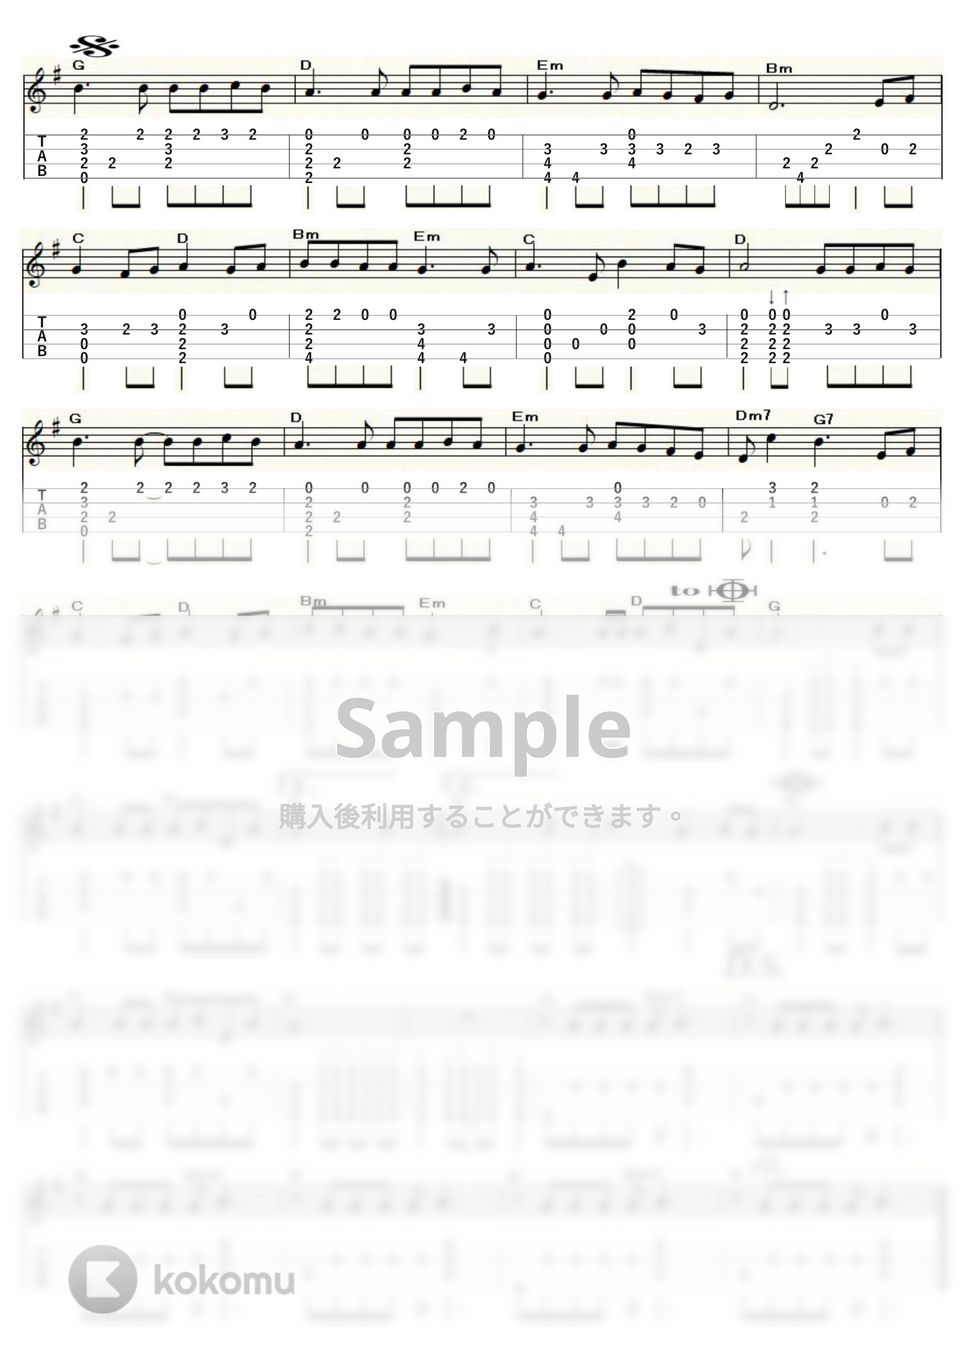 AKB48 - 365日の紙飛行機 (ｳｸﾚﾚｿﾛ / Low-G / 中級) by ukulelepapa